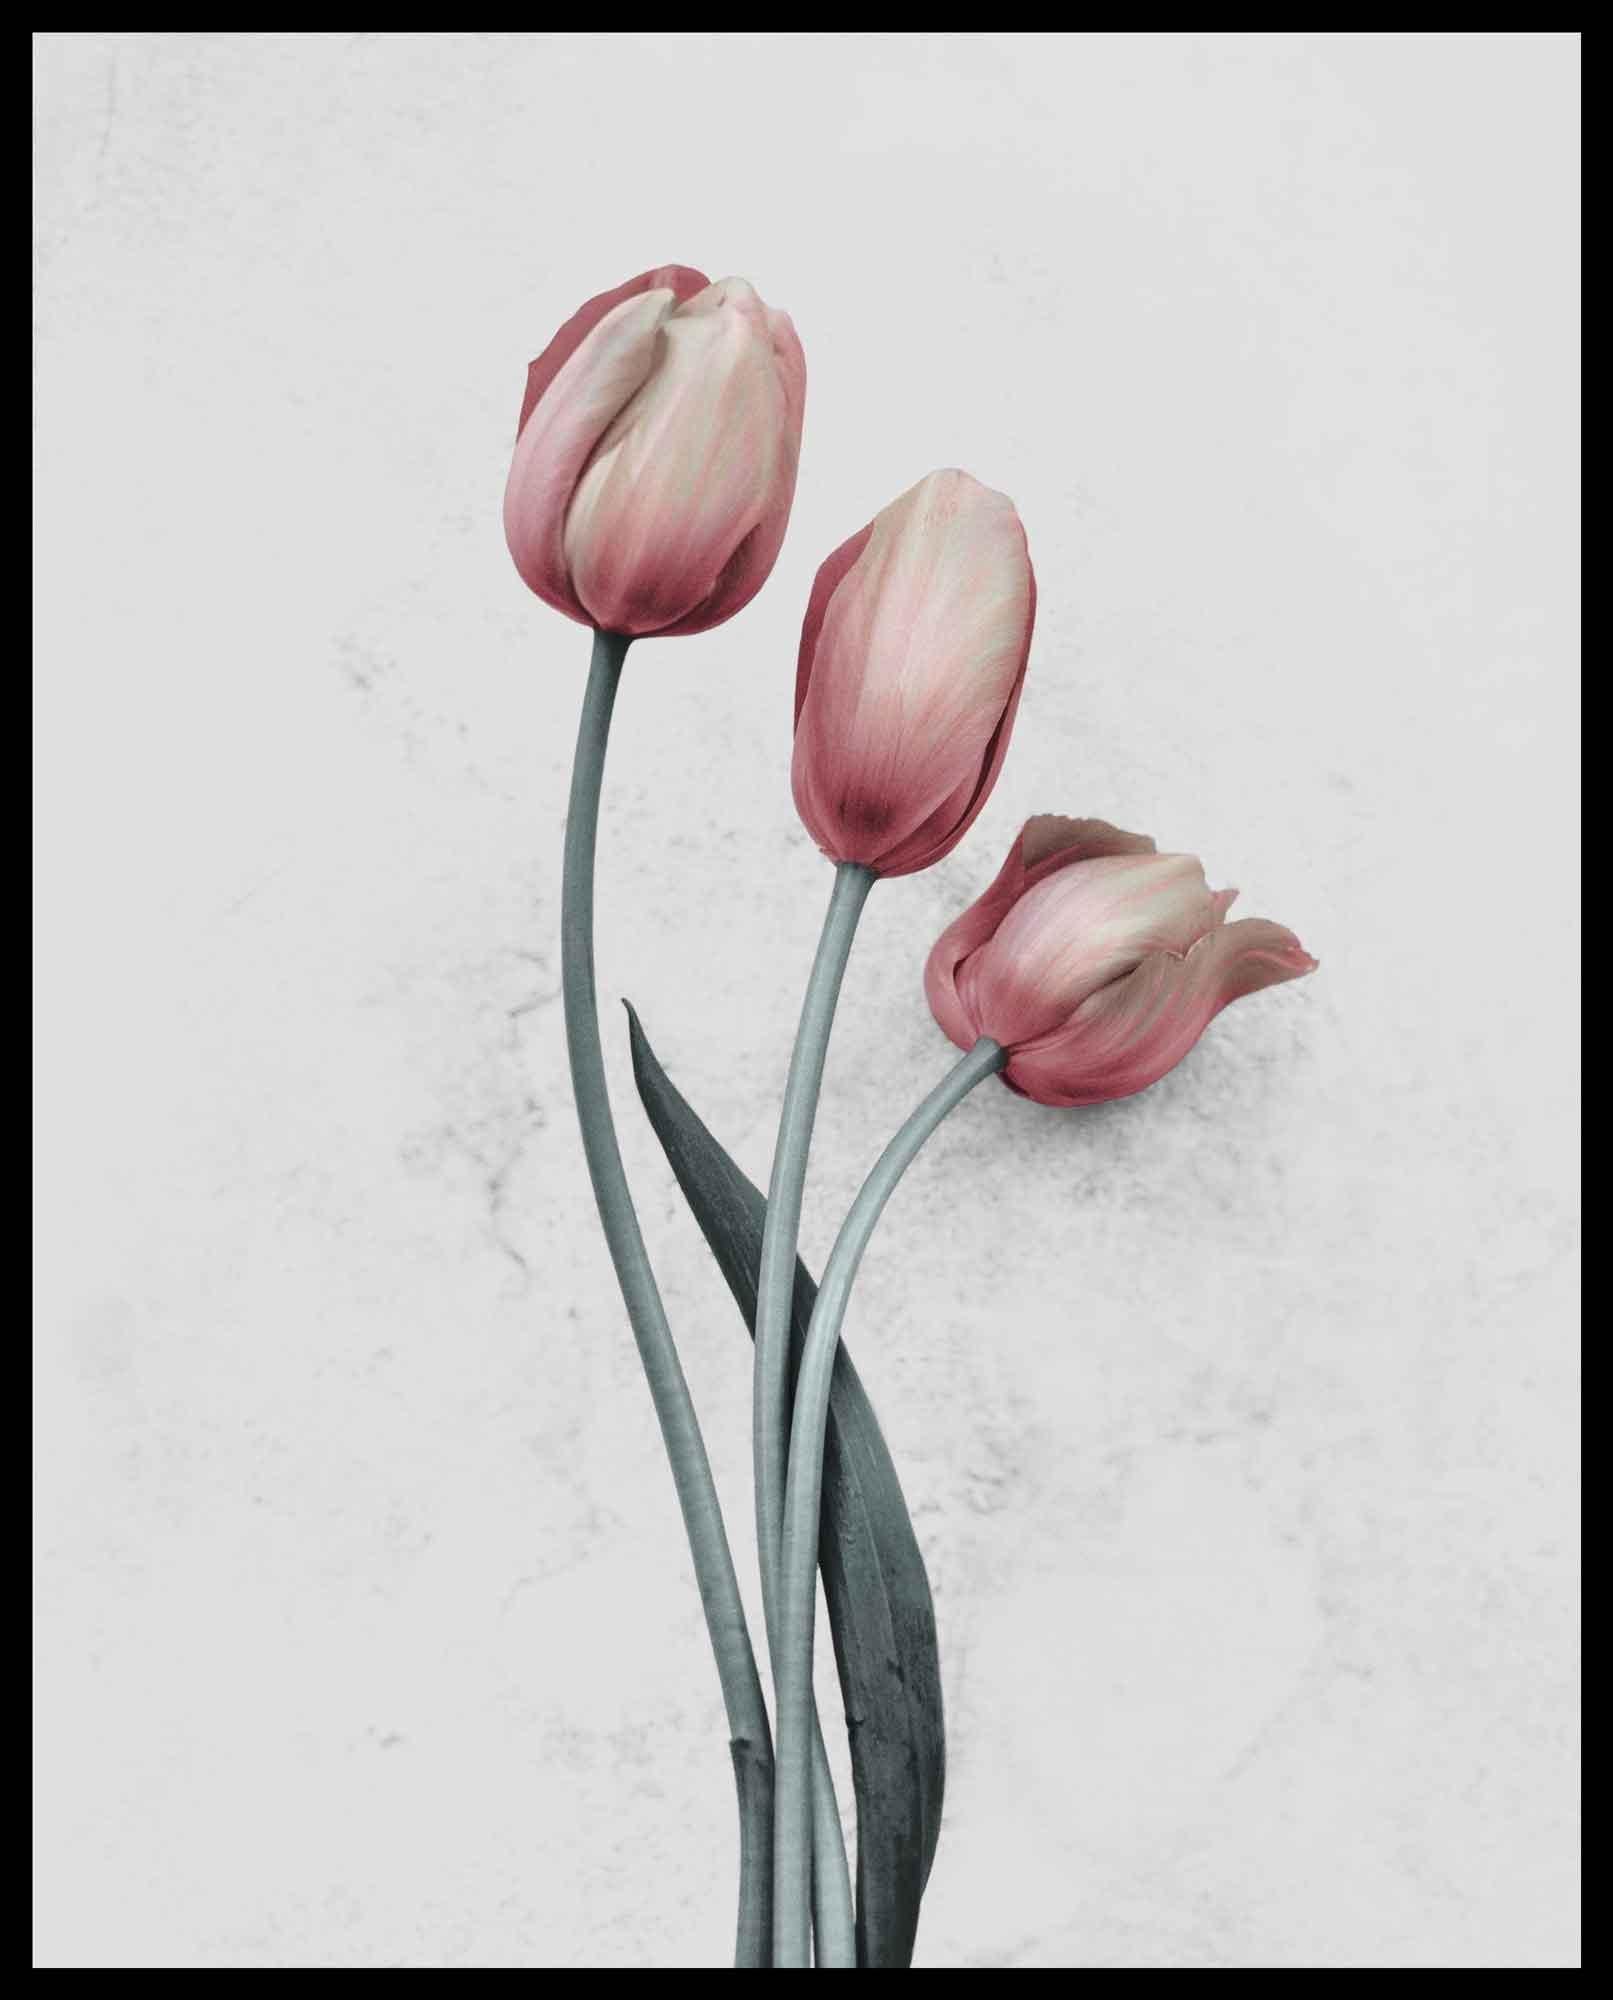 Botanica #12 (Tulipa Gesneriana) - Gray Color Photograph by Vee Speers